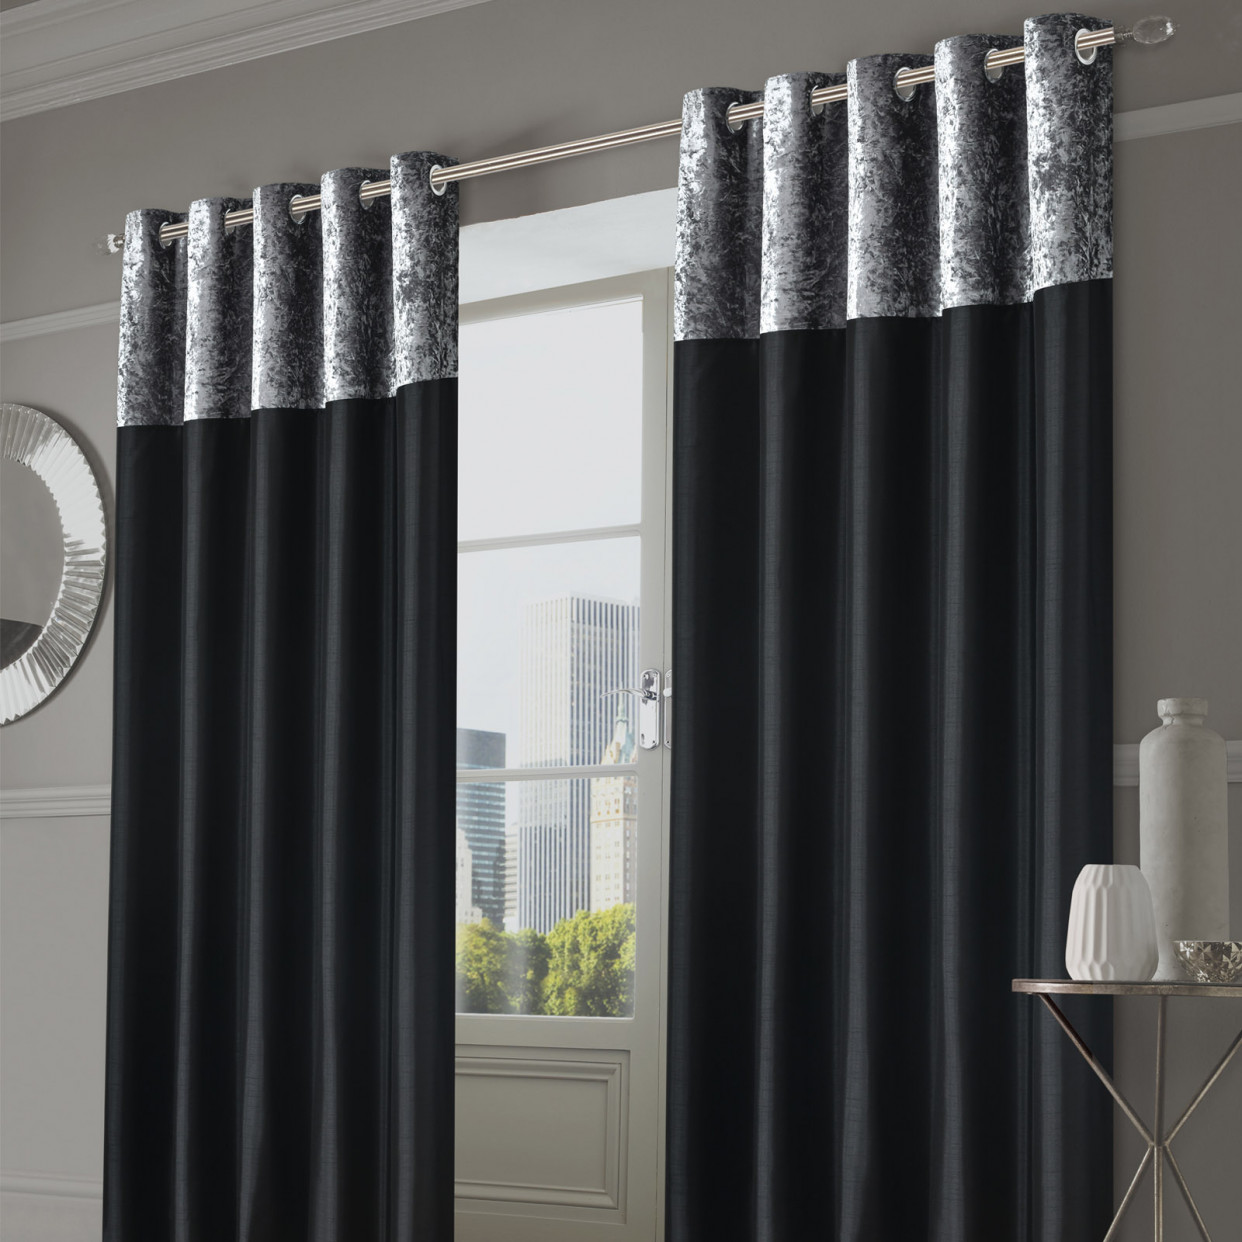 Sienna Home Manhattan Crushed Velvet Band Eyelet Curtains - Black, 90" x 72">